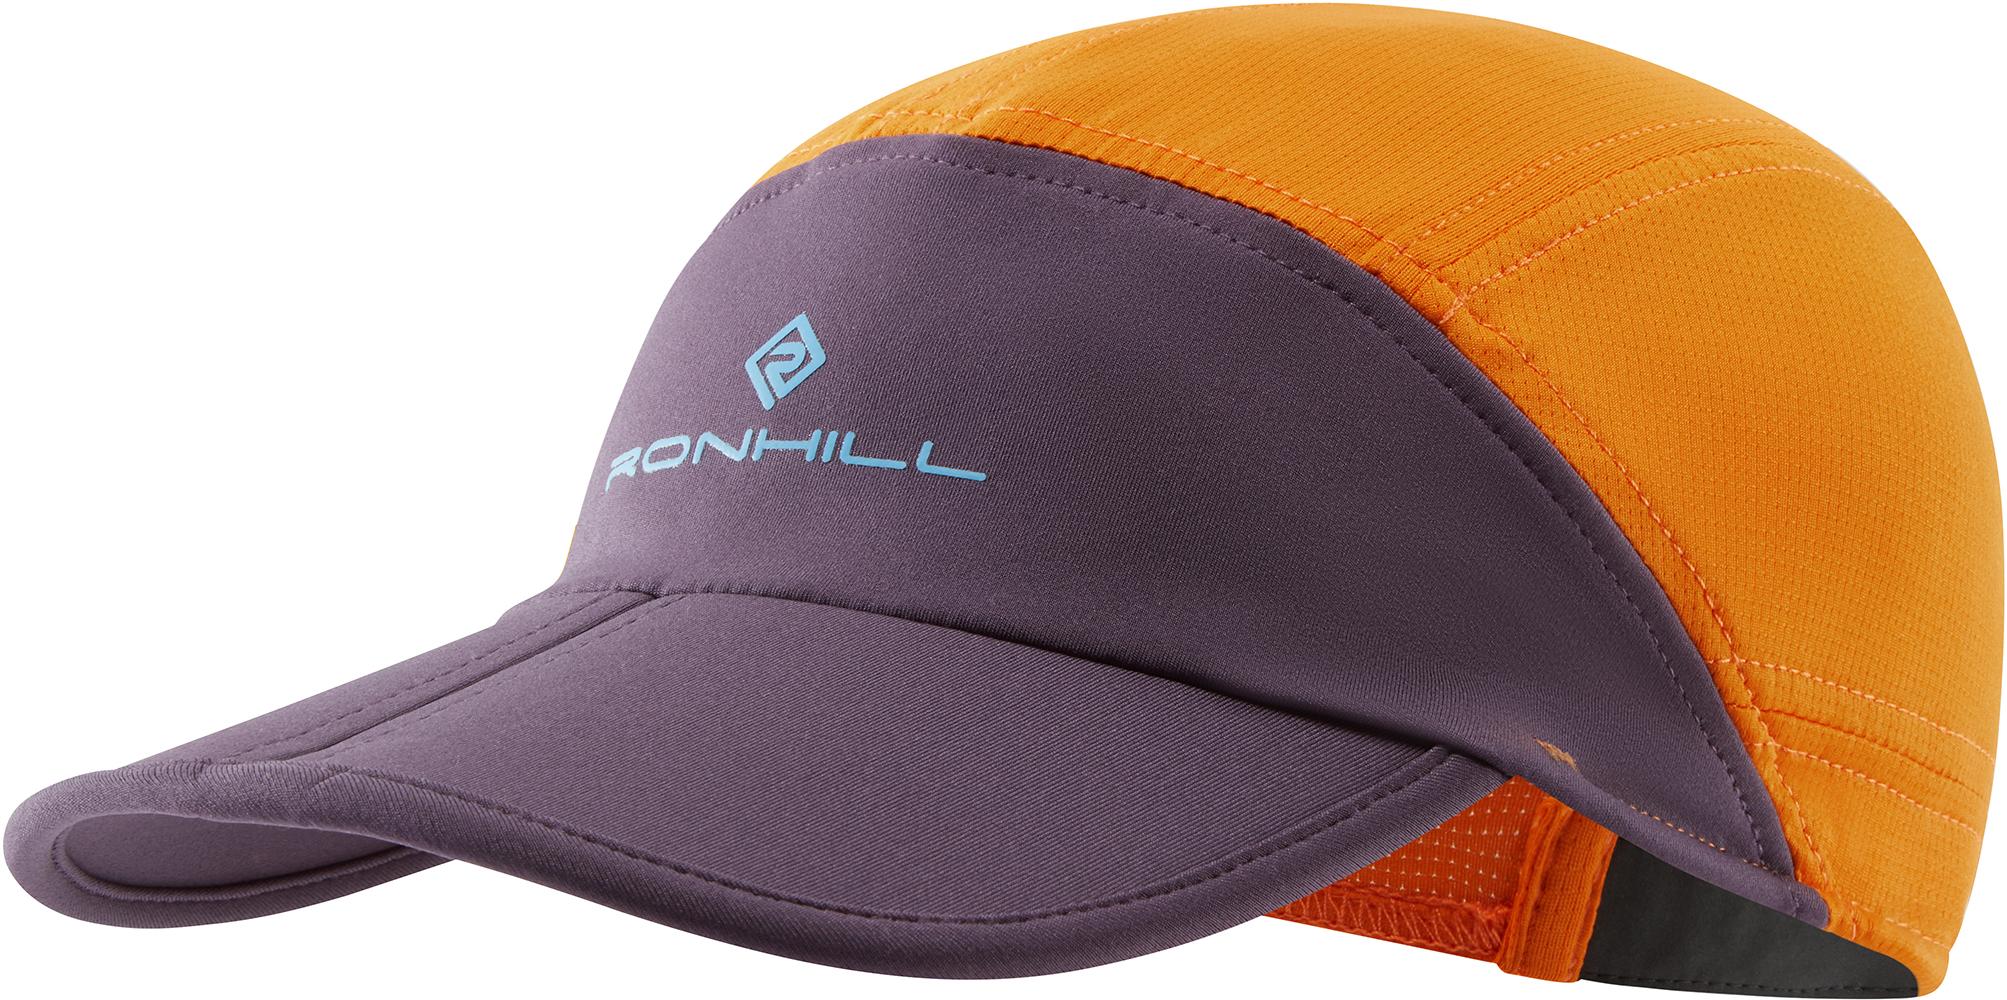 Ronhill Air-lite Split Cap - Nightshade/spice